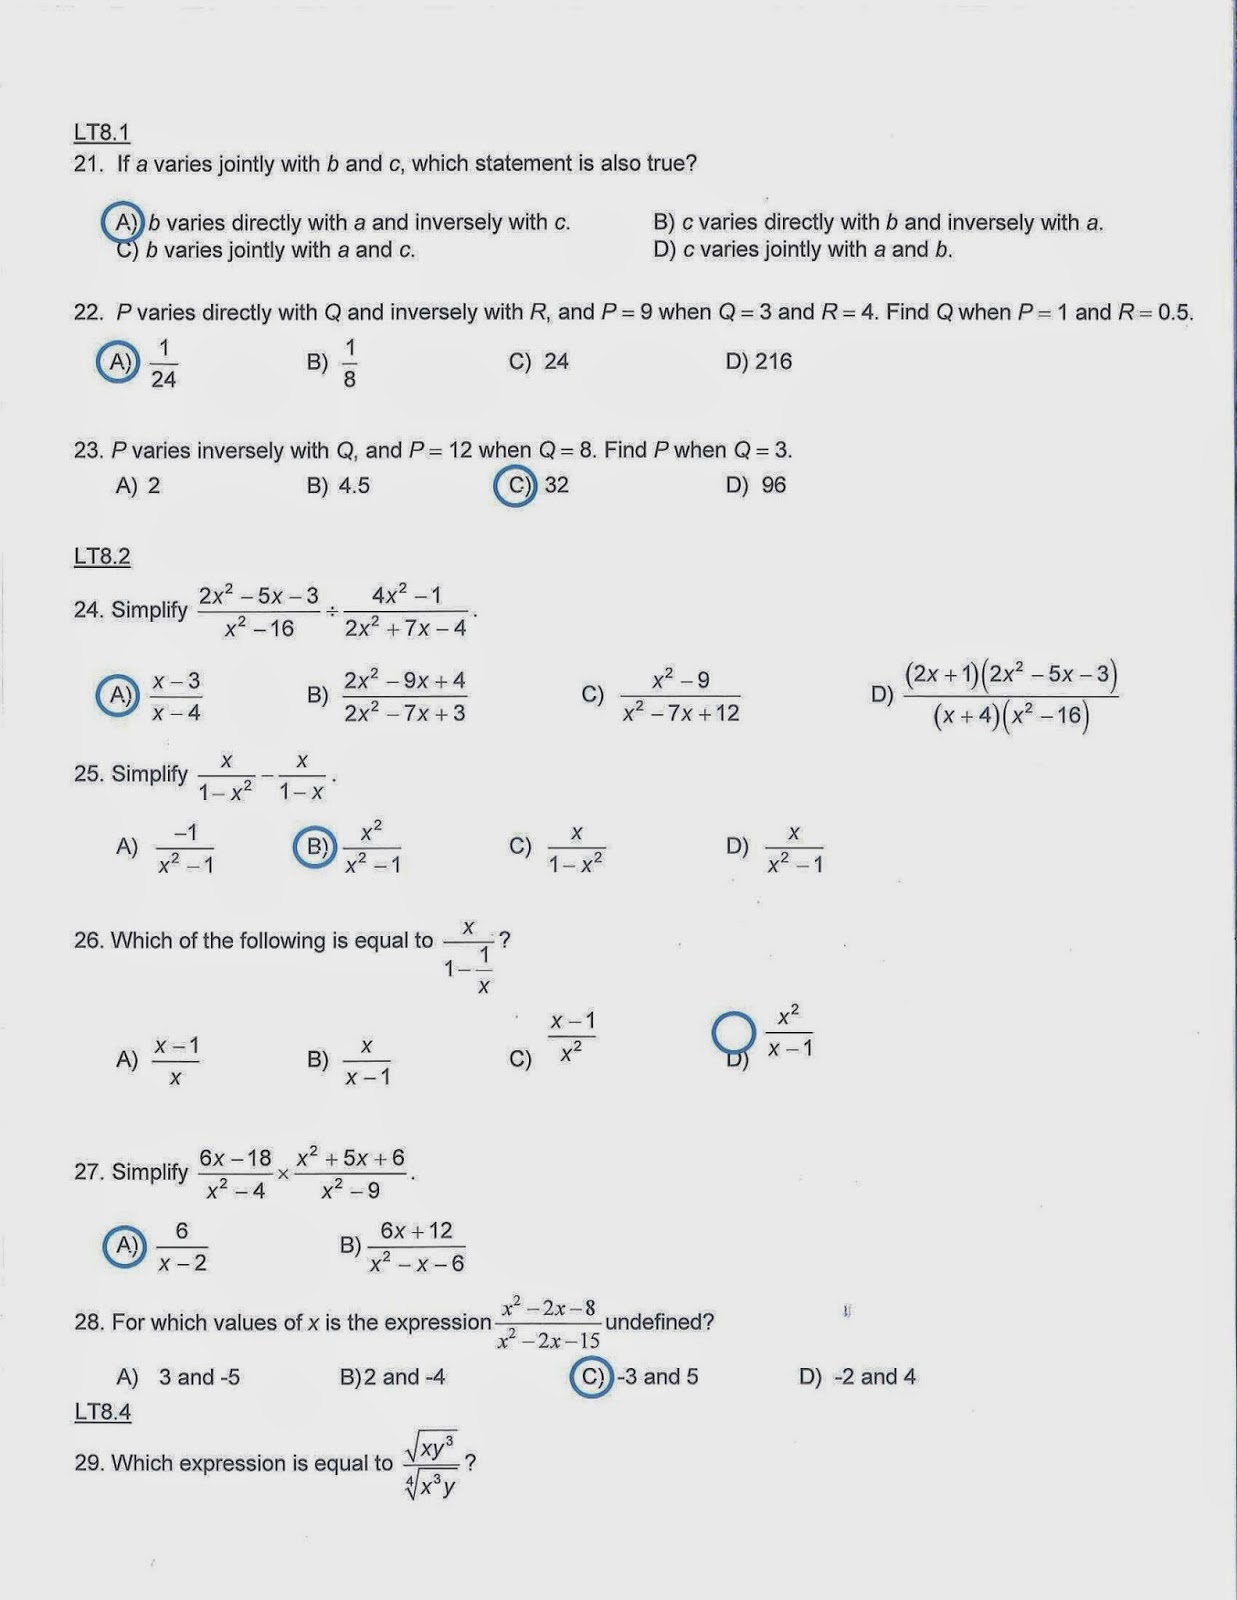 Byu Algebra 2 Part 1 Final Exam Answers